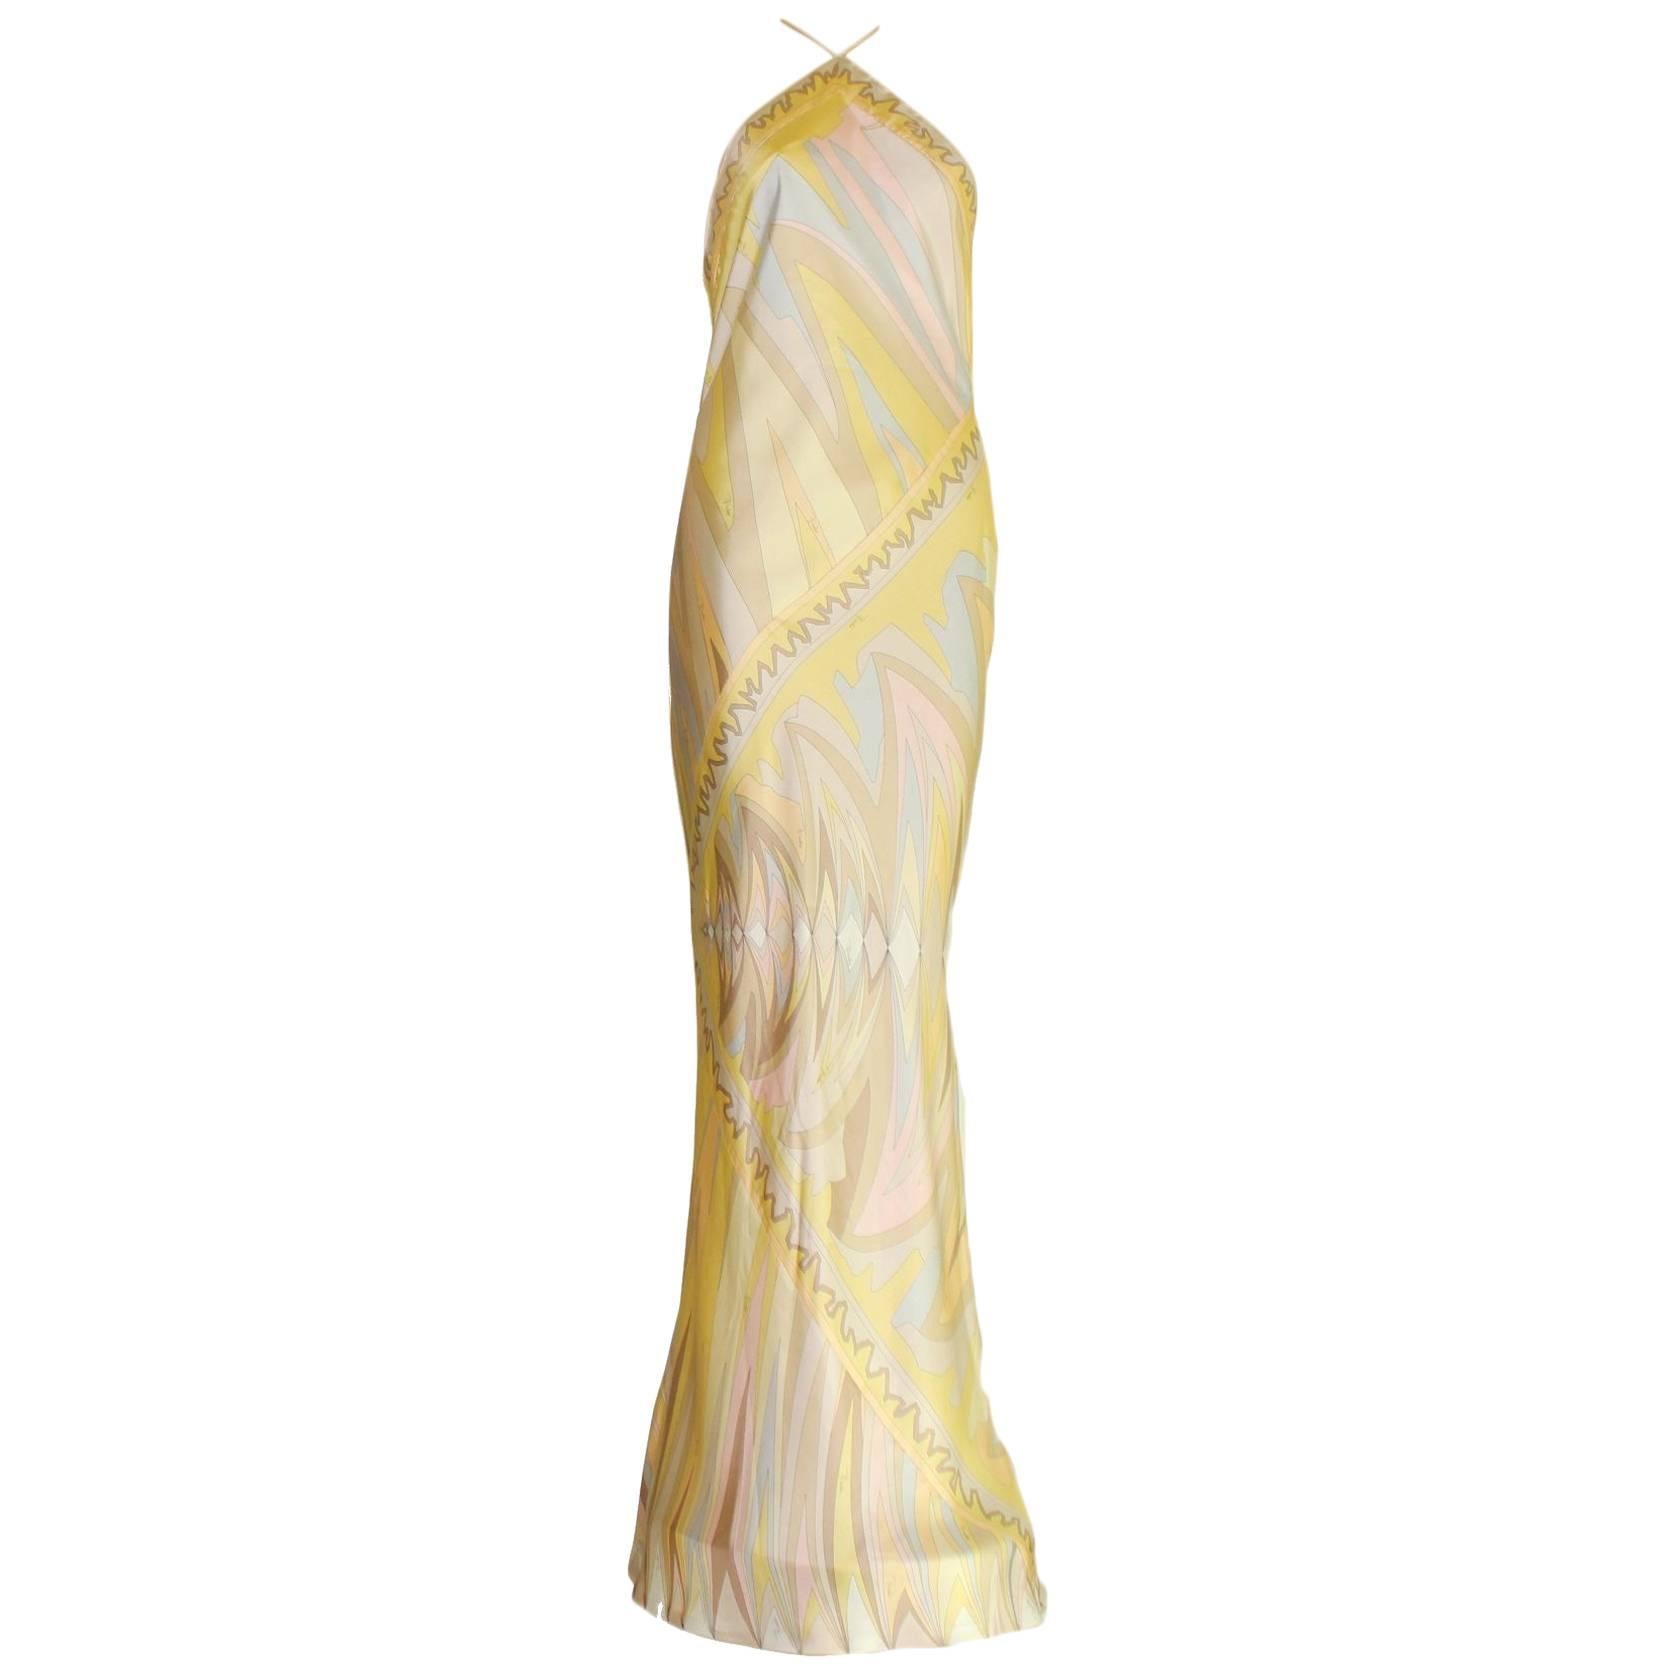 Stunning Emilio Pucci Signature Print Evening Dress Gown